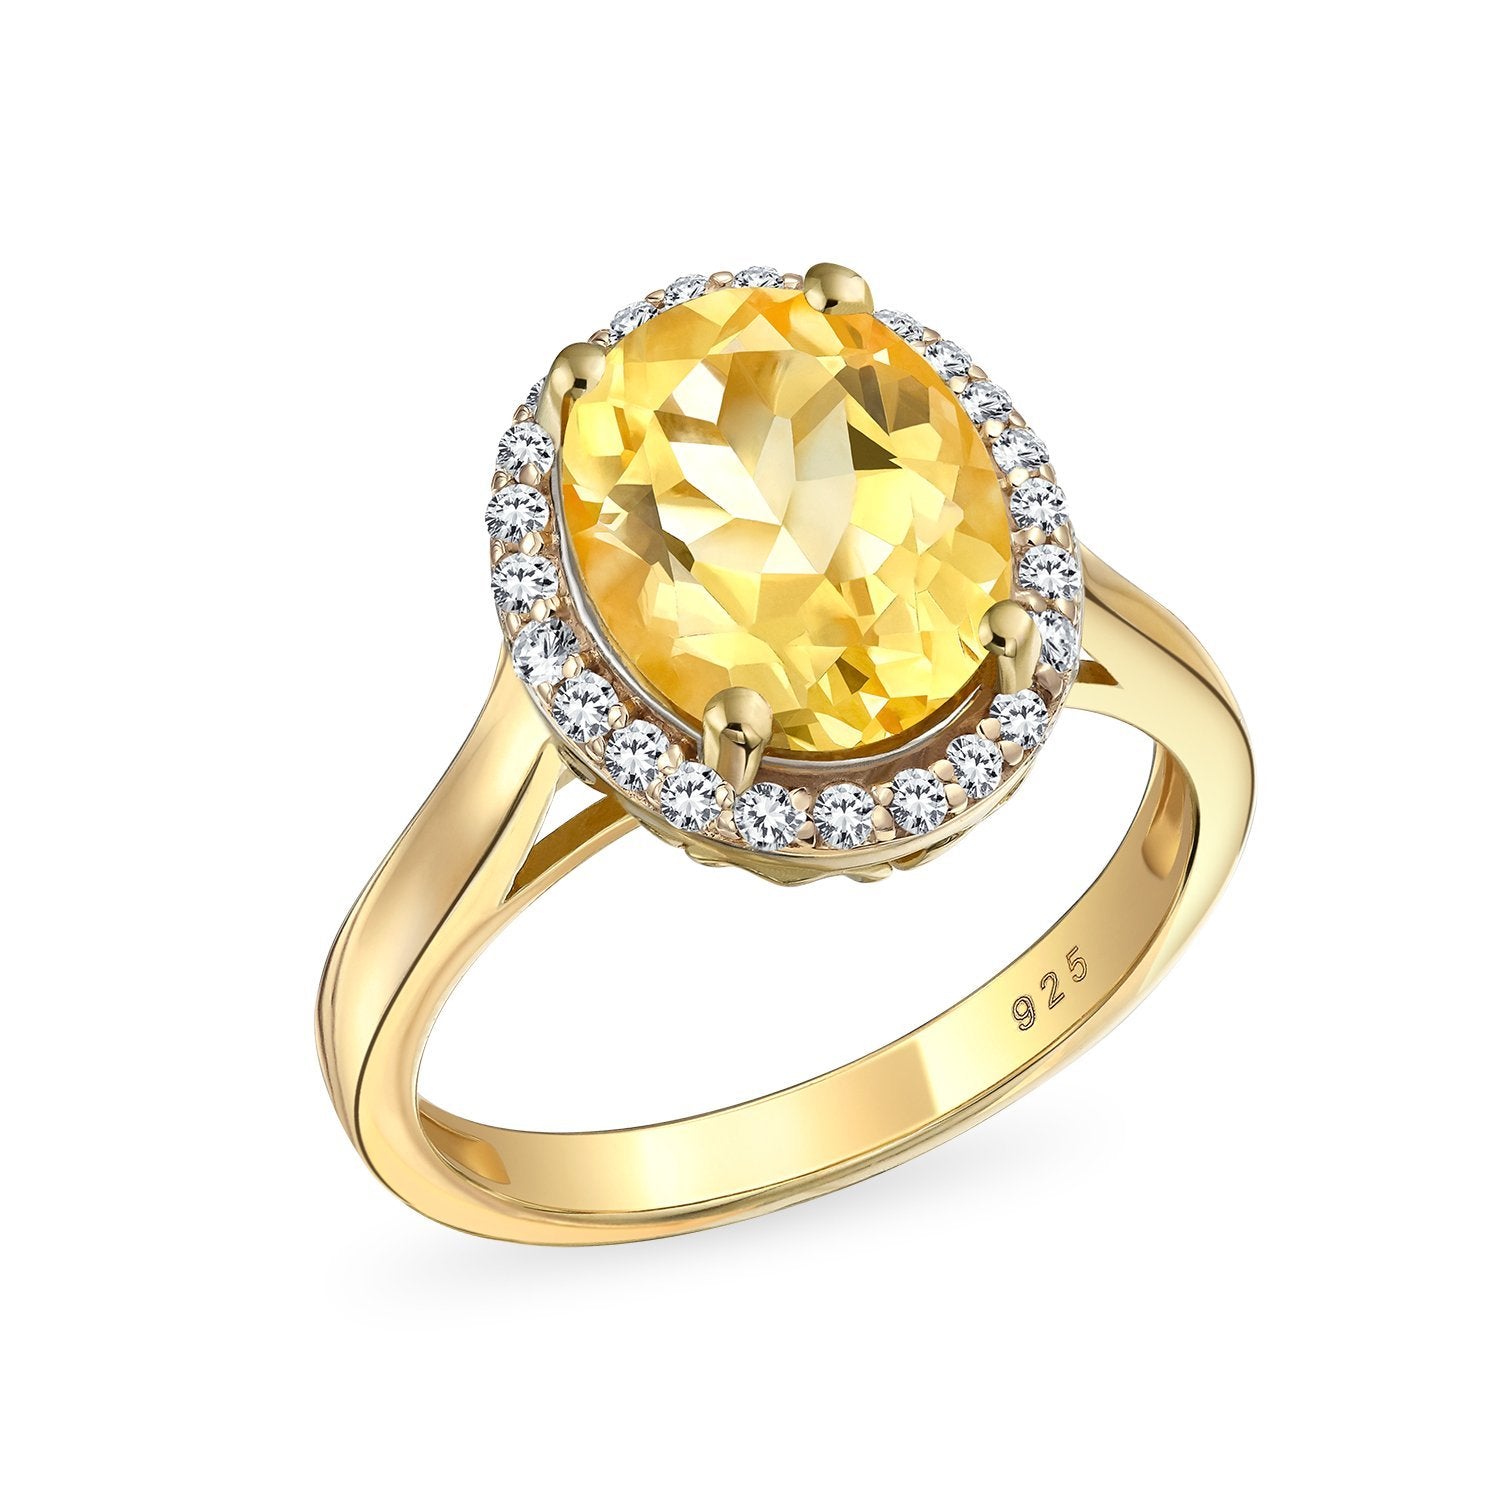 3CT Gemstone Yellow Citrine Zircon Halo Ring Gold Plated Silver - Joyeria Lady